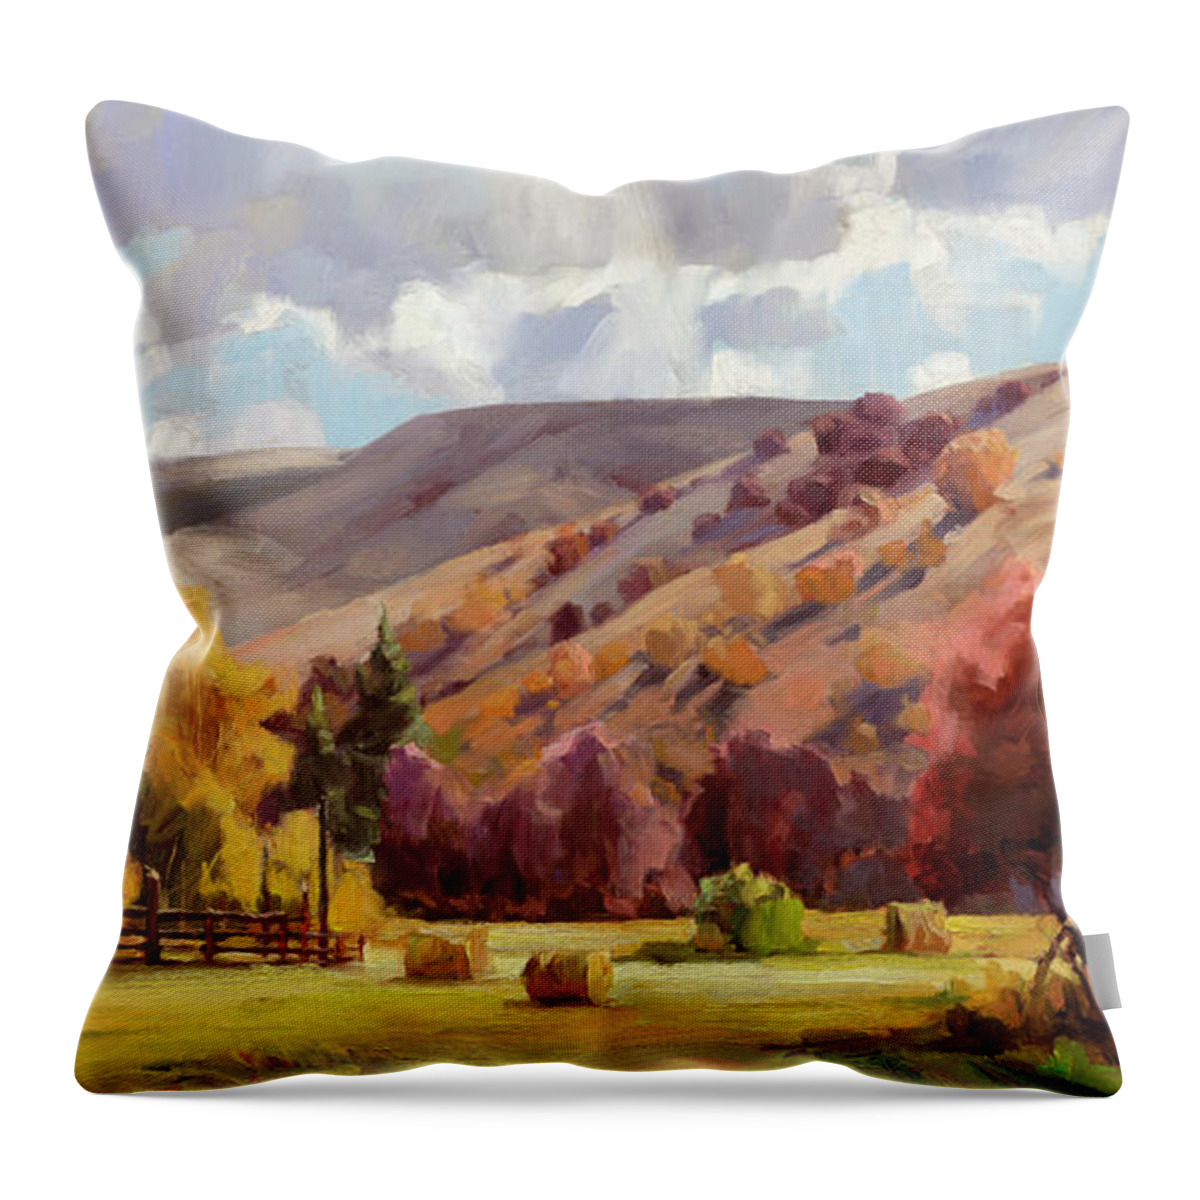 Autumn Throw Pillow featuring the painting Autumn Illuminated by Steve Henderson